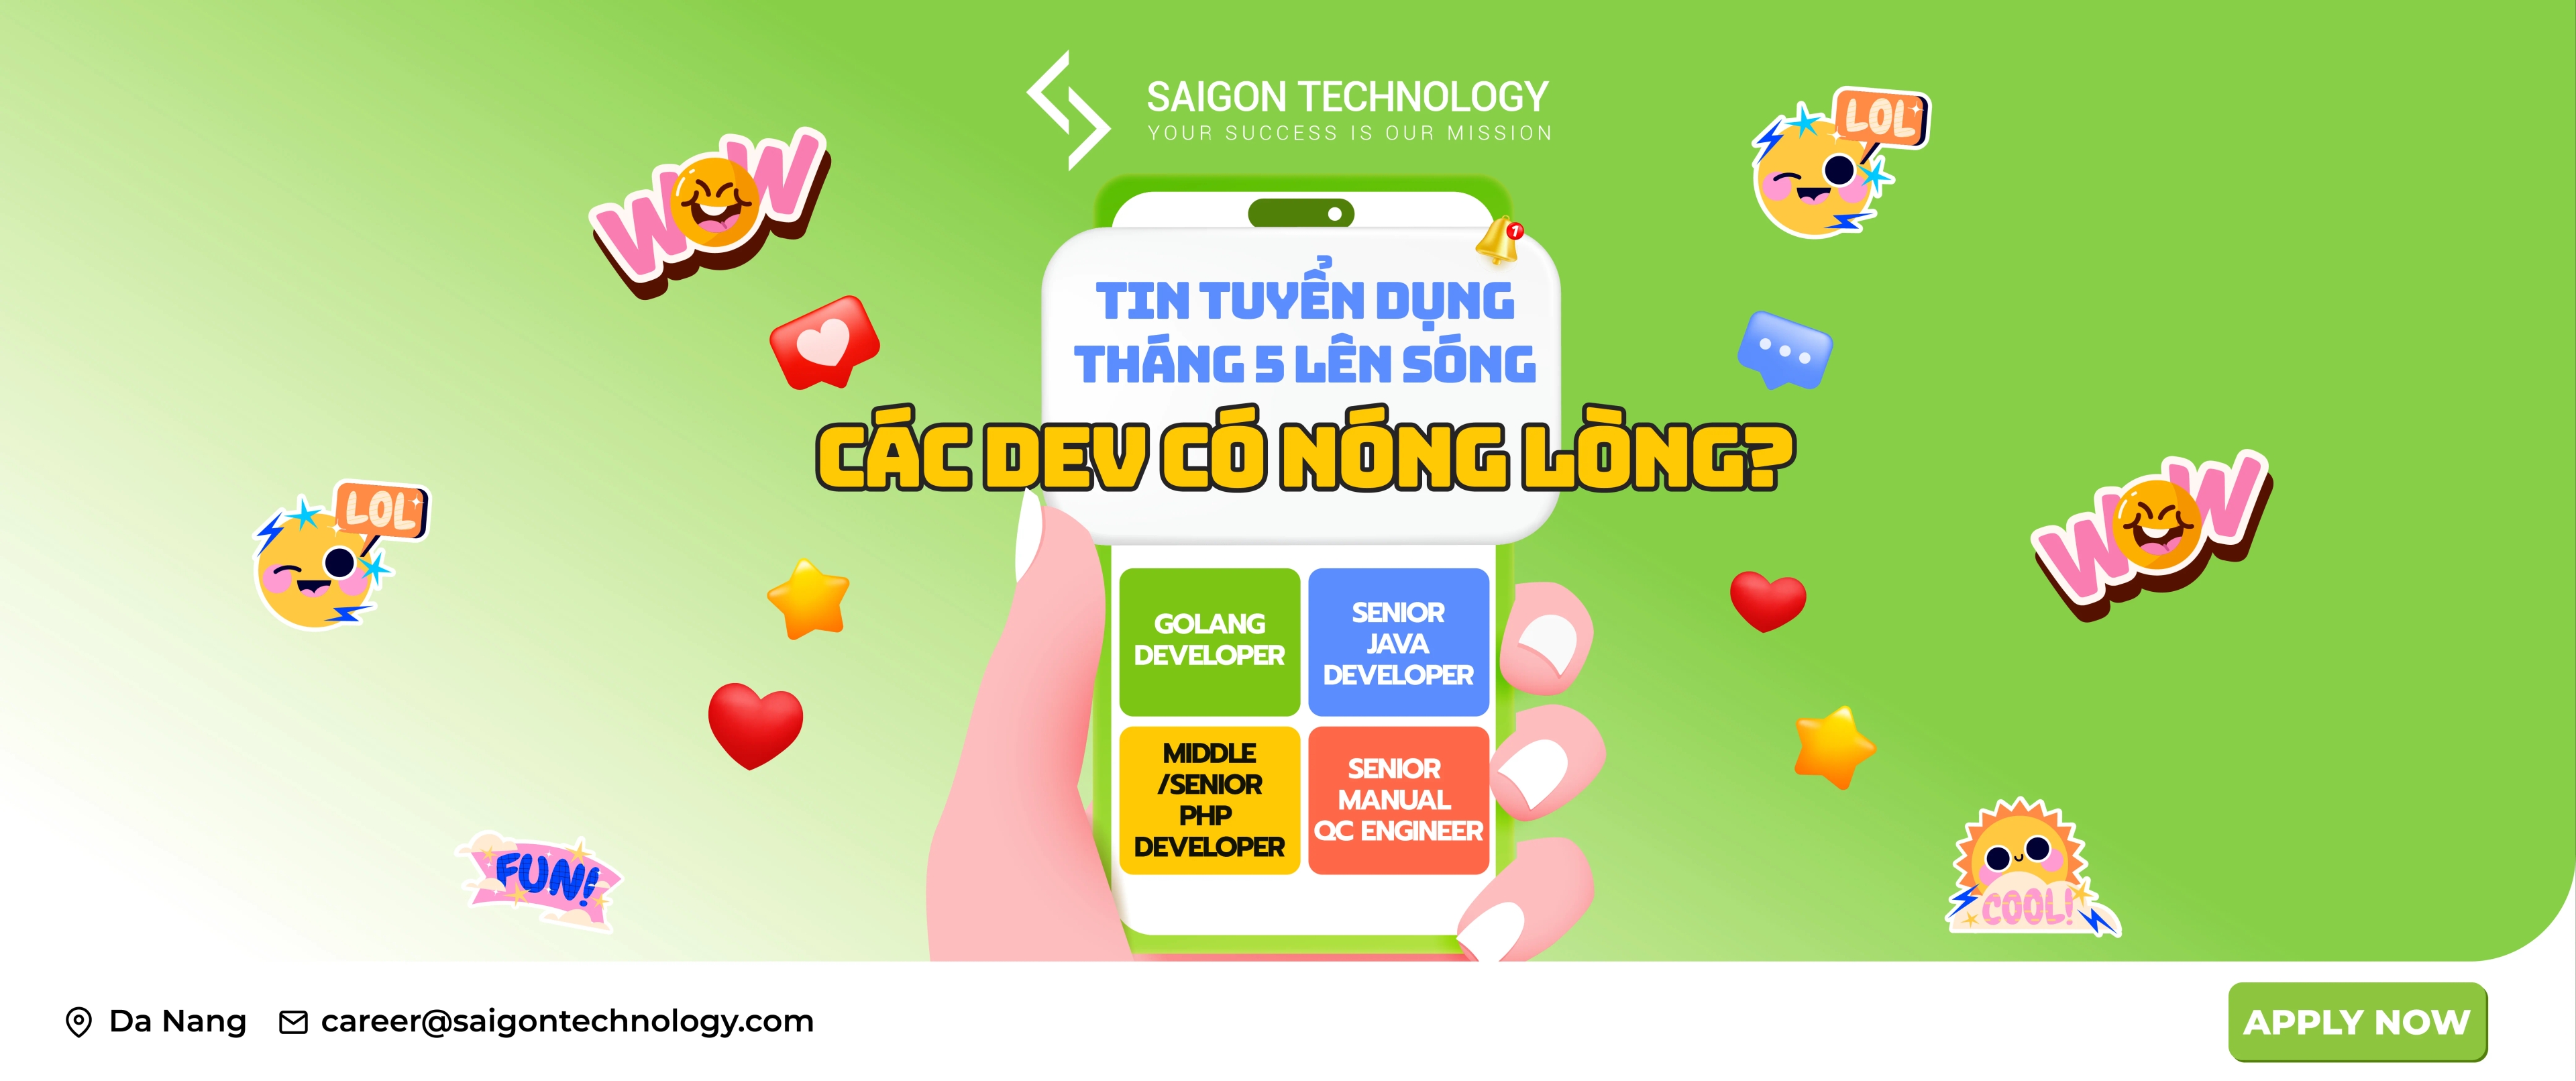 saigon_technology_1